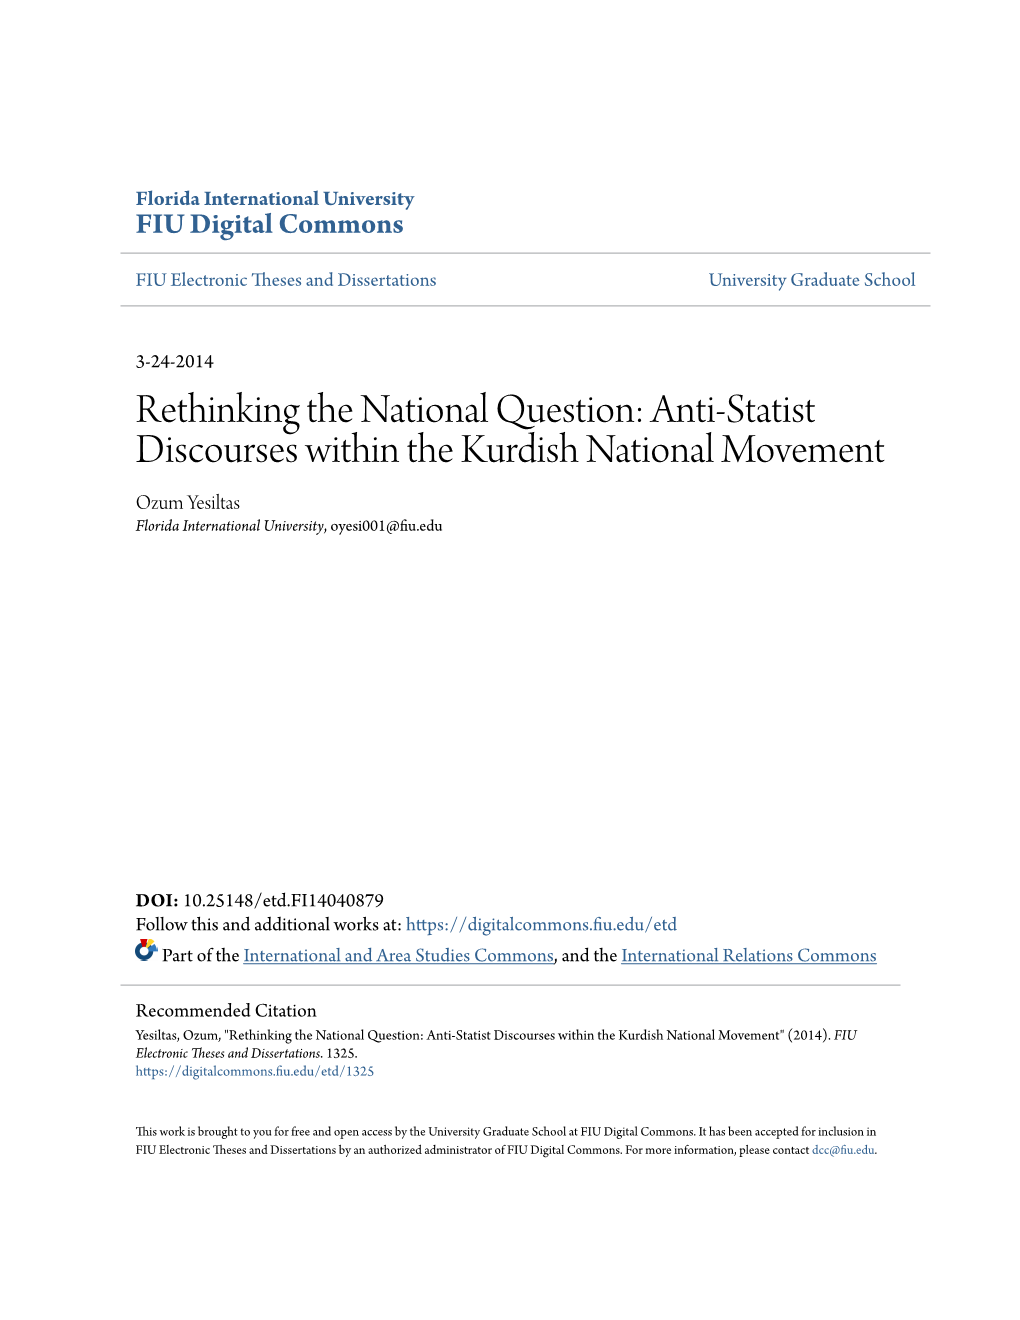 Anti-Statist Discourses Within the Kurdish National Movement Ozum Yesiltas Florida International University, Oyesi001@Fiu.Edu